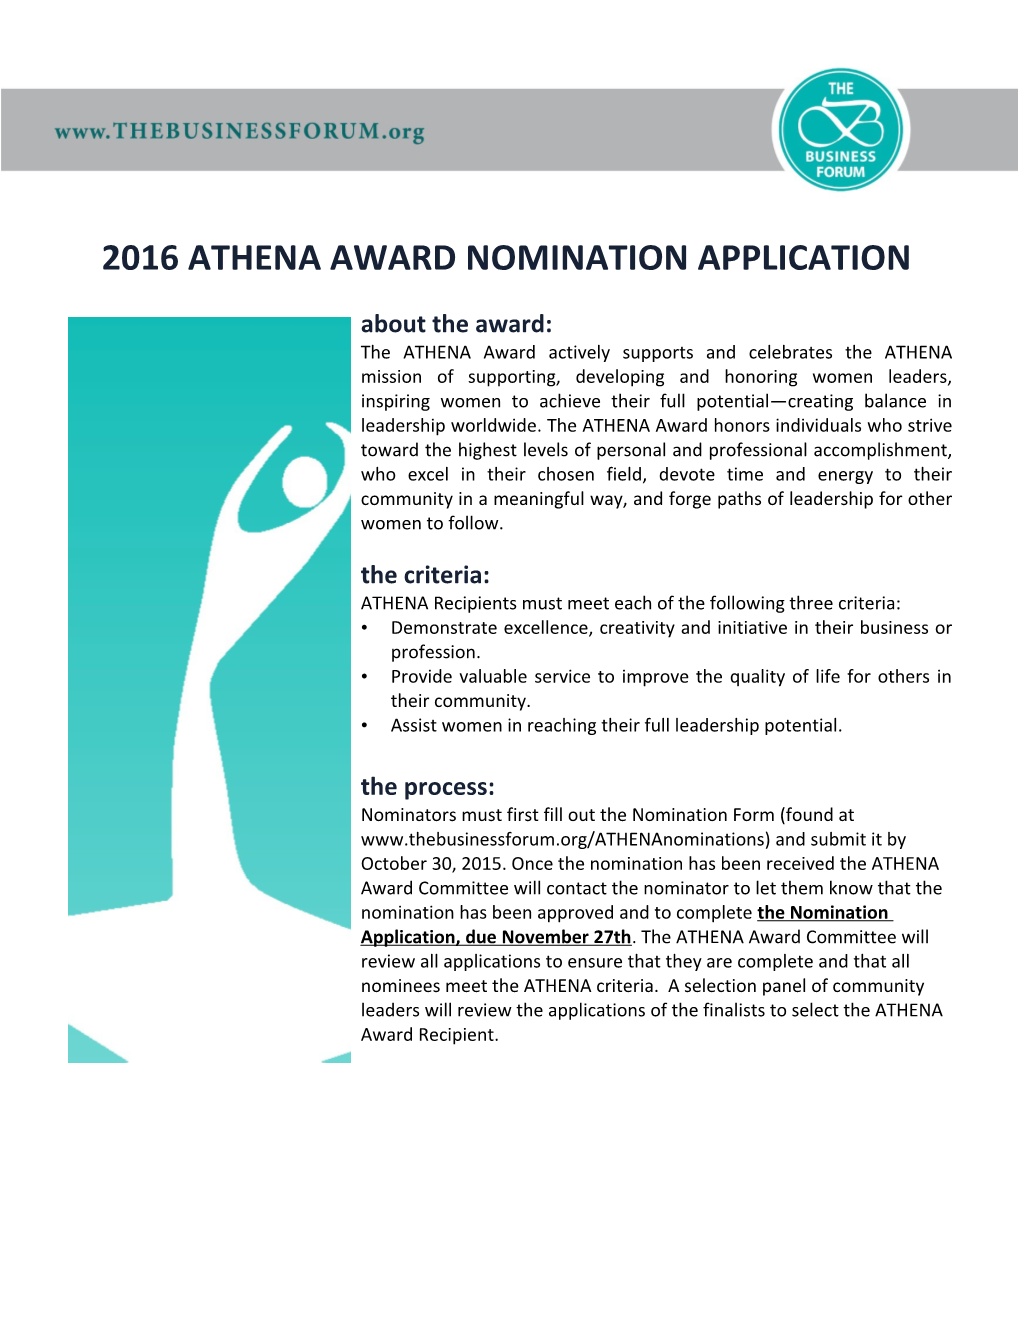 2016 ATHENA Award NOMINATION APPLICATION